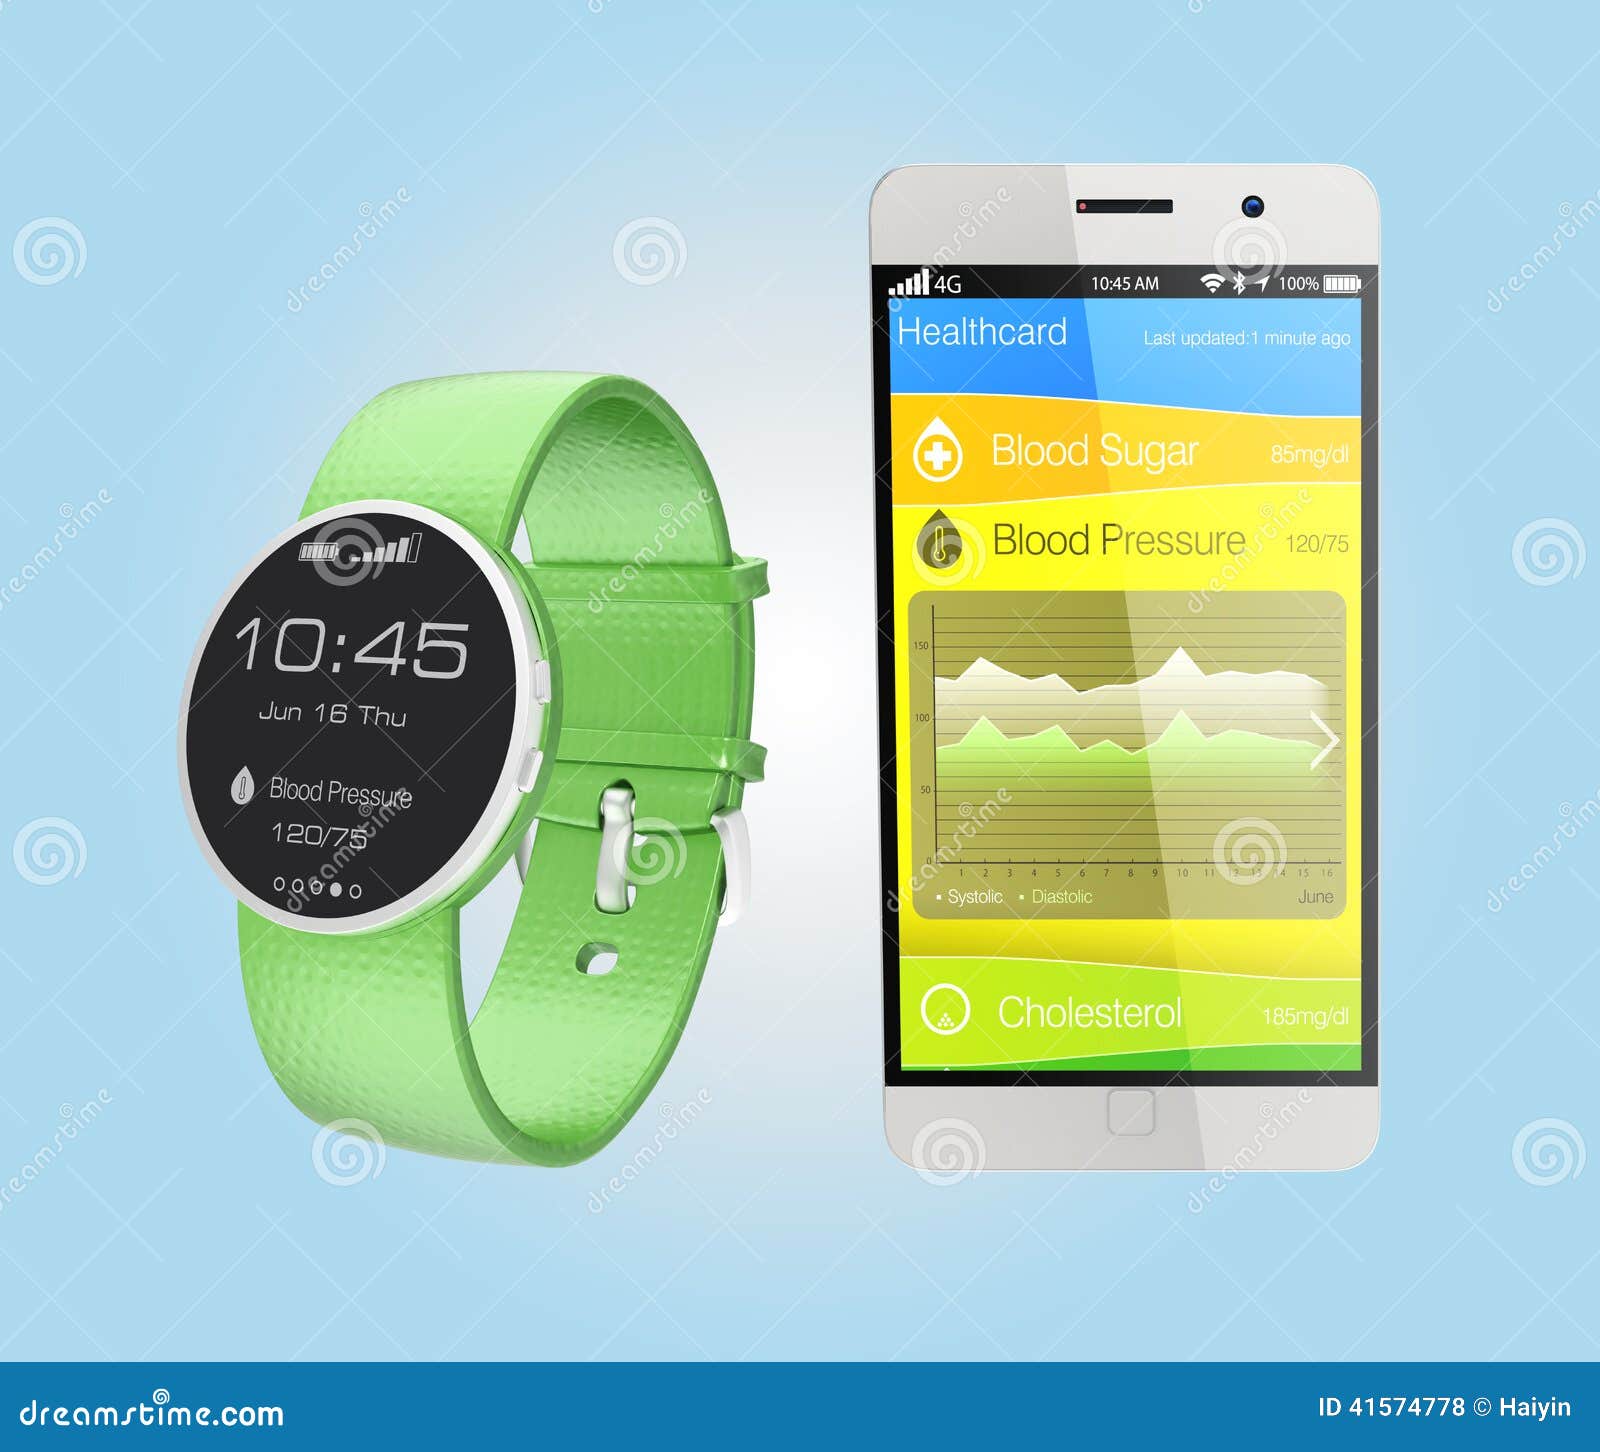 blood pressure information synchronize from smart watch